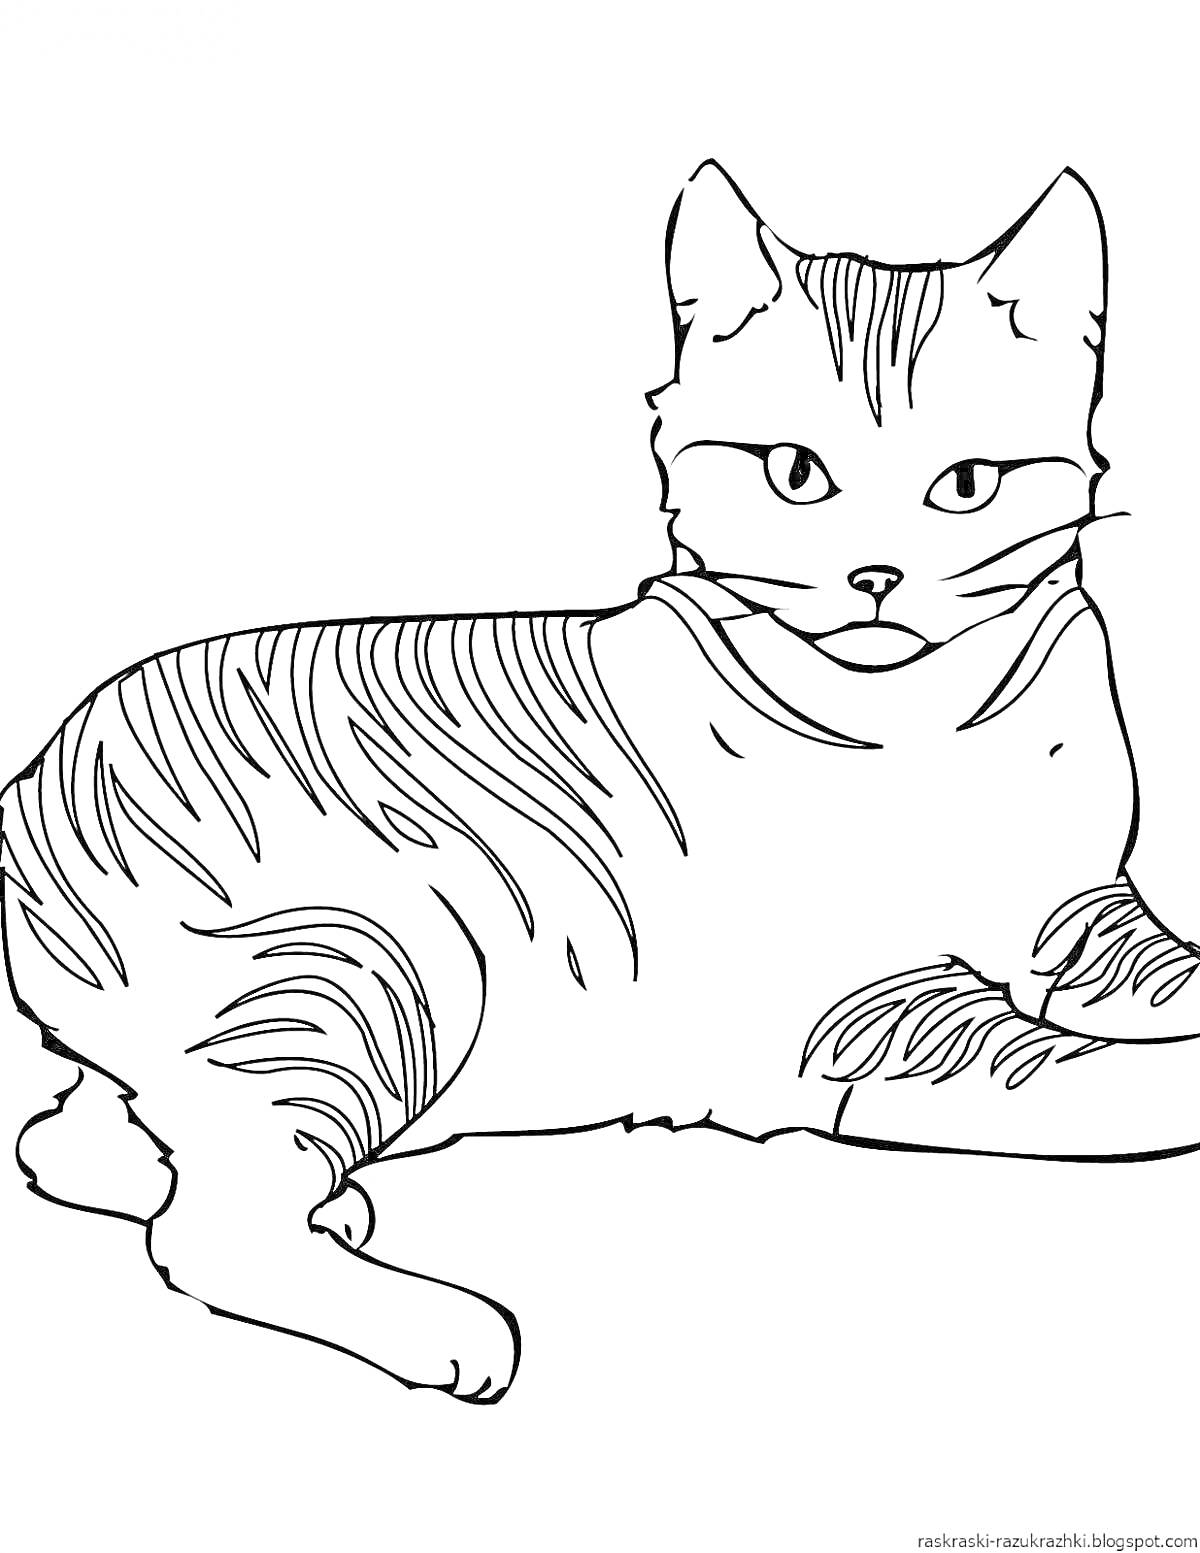 Раскраска Лежащий кот с полосками на теле